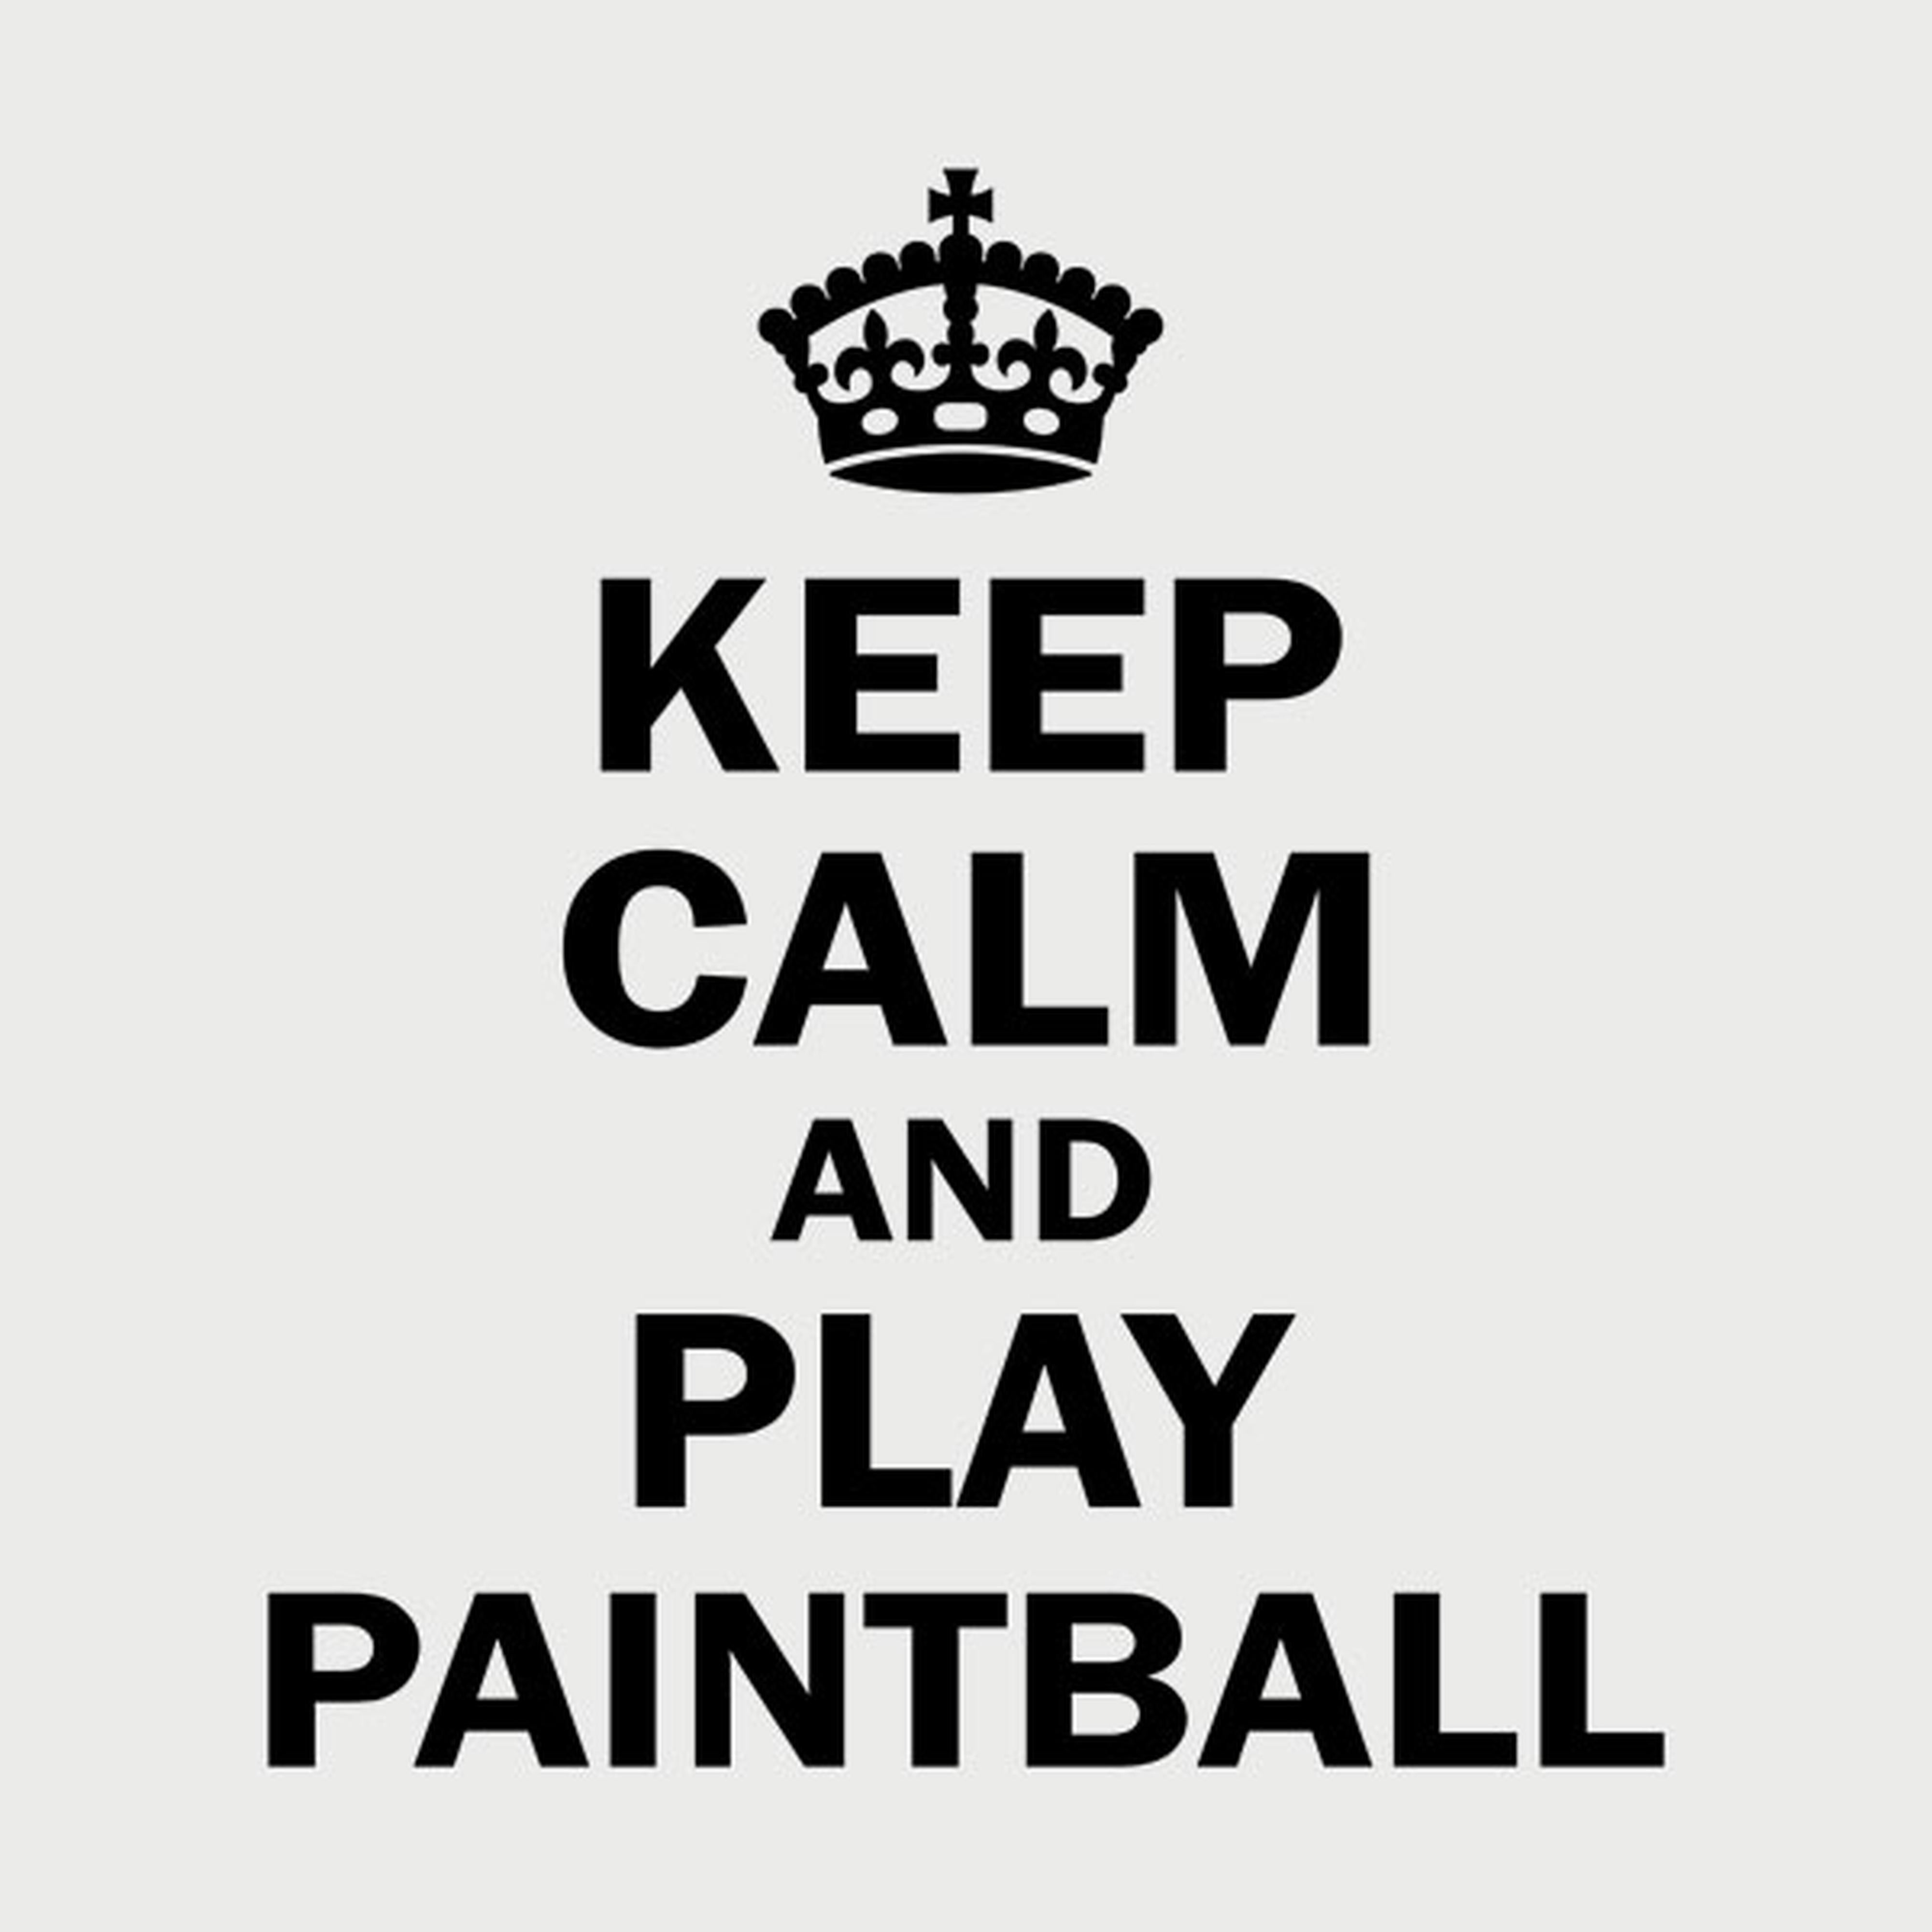 Keep calm and play paintball - T-shirt